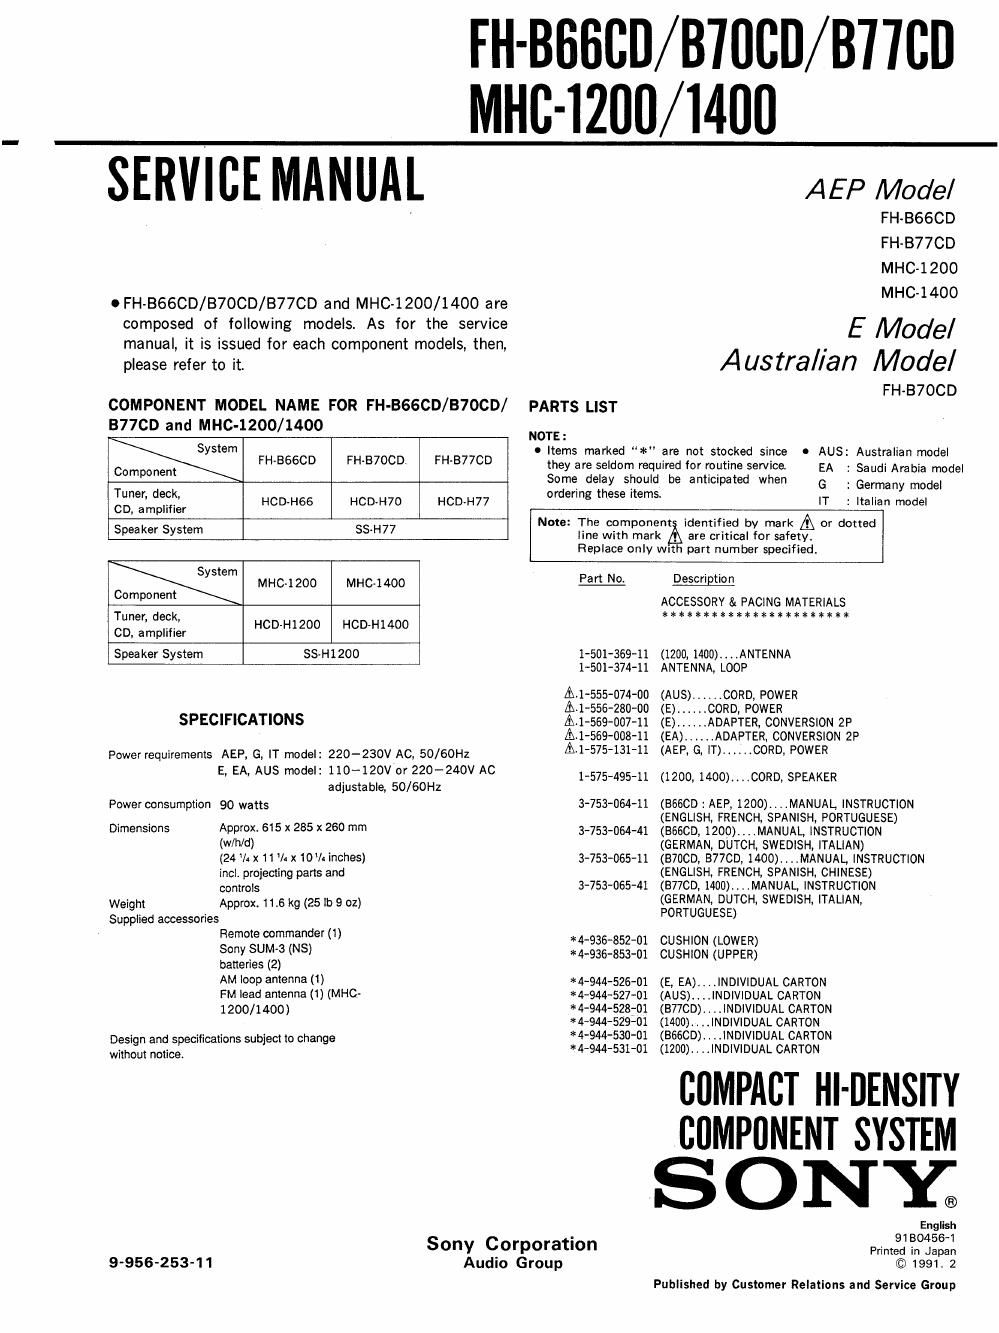 sony mhc 1200 service manual